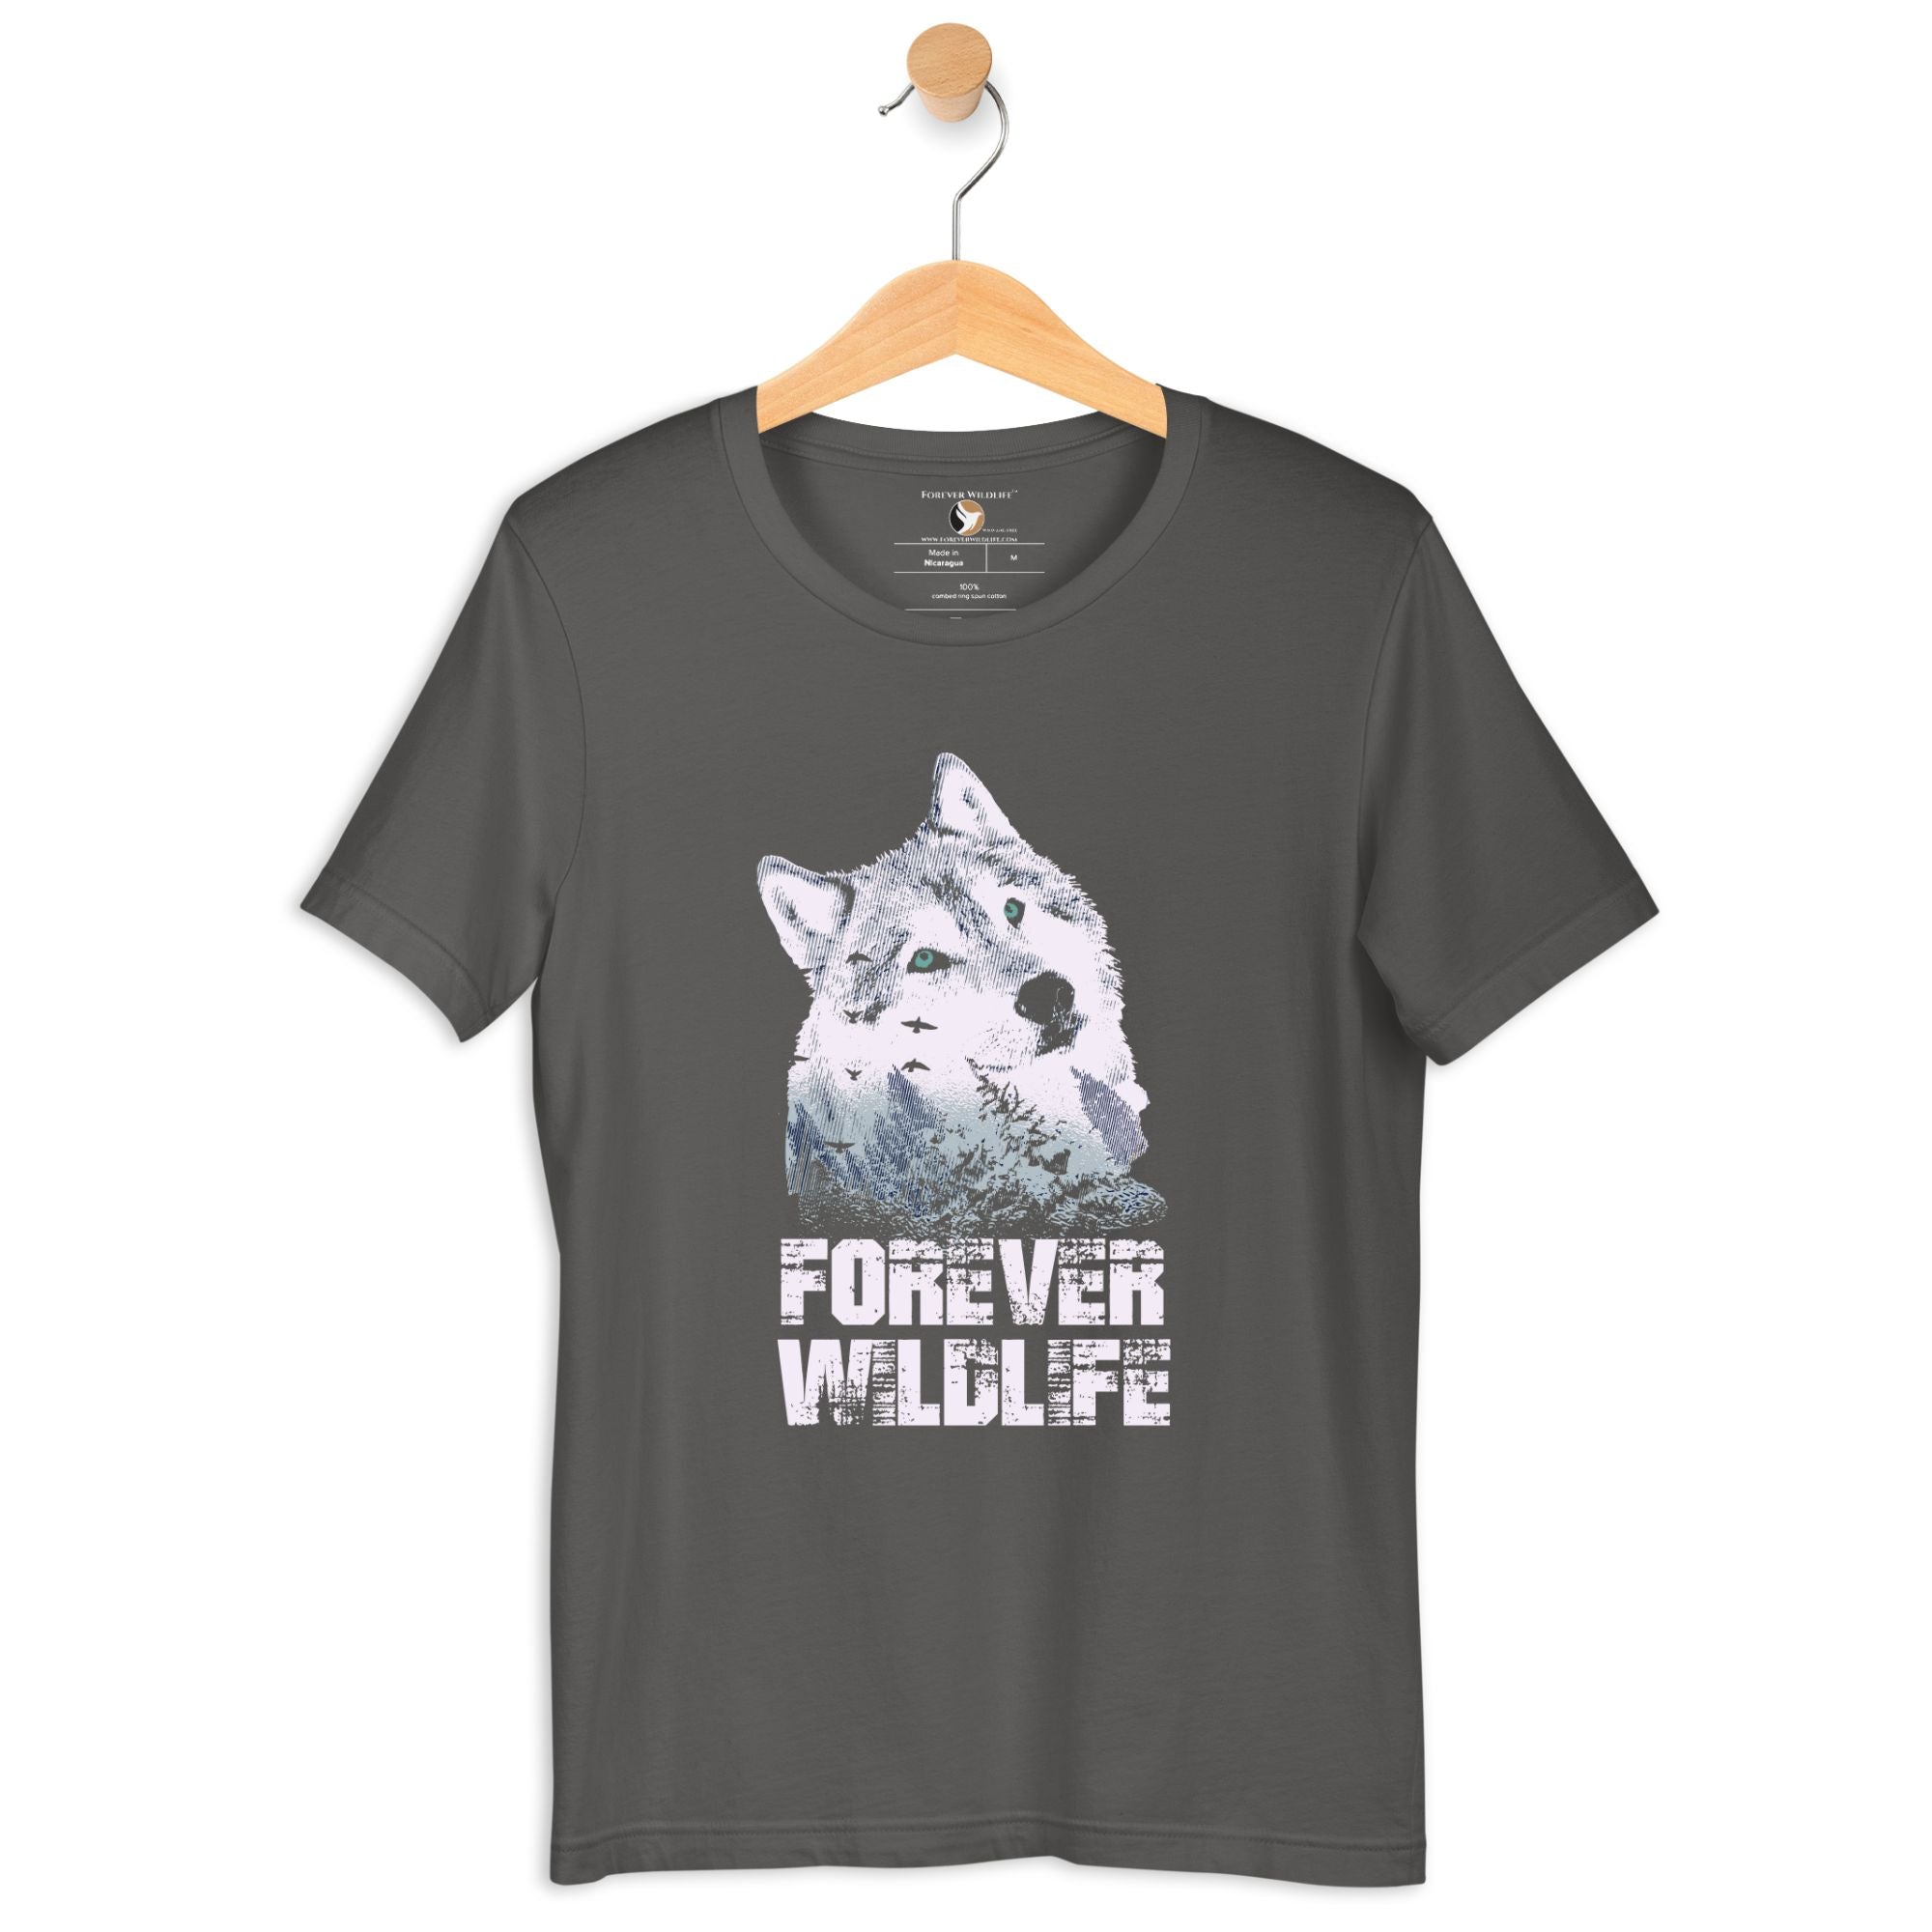 Wolf T-Shirt in Asphalt – Premium Wildlife T-Shirt Design, Wildlife Clothing & Apparel from Forever Wildlife